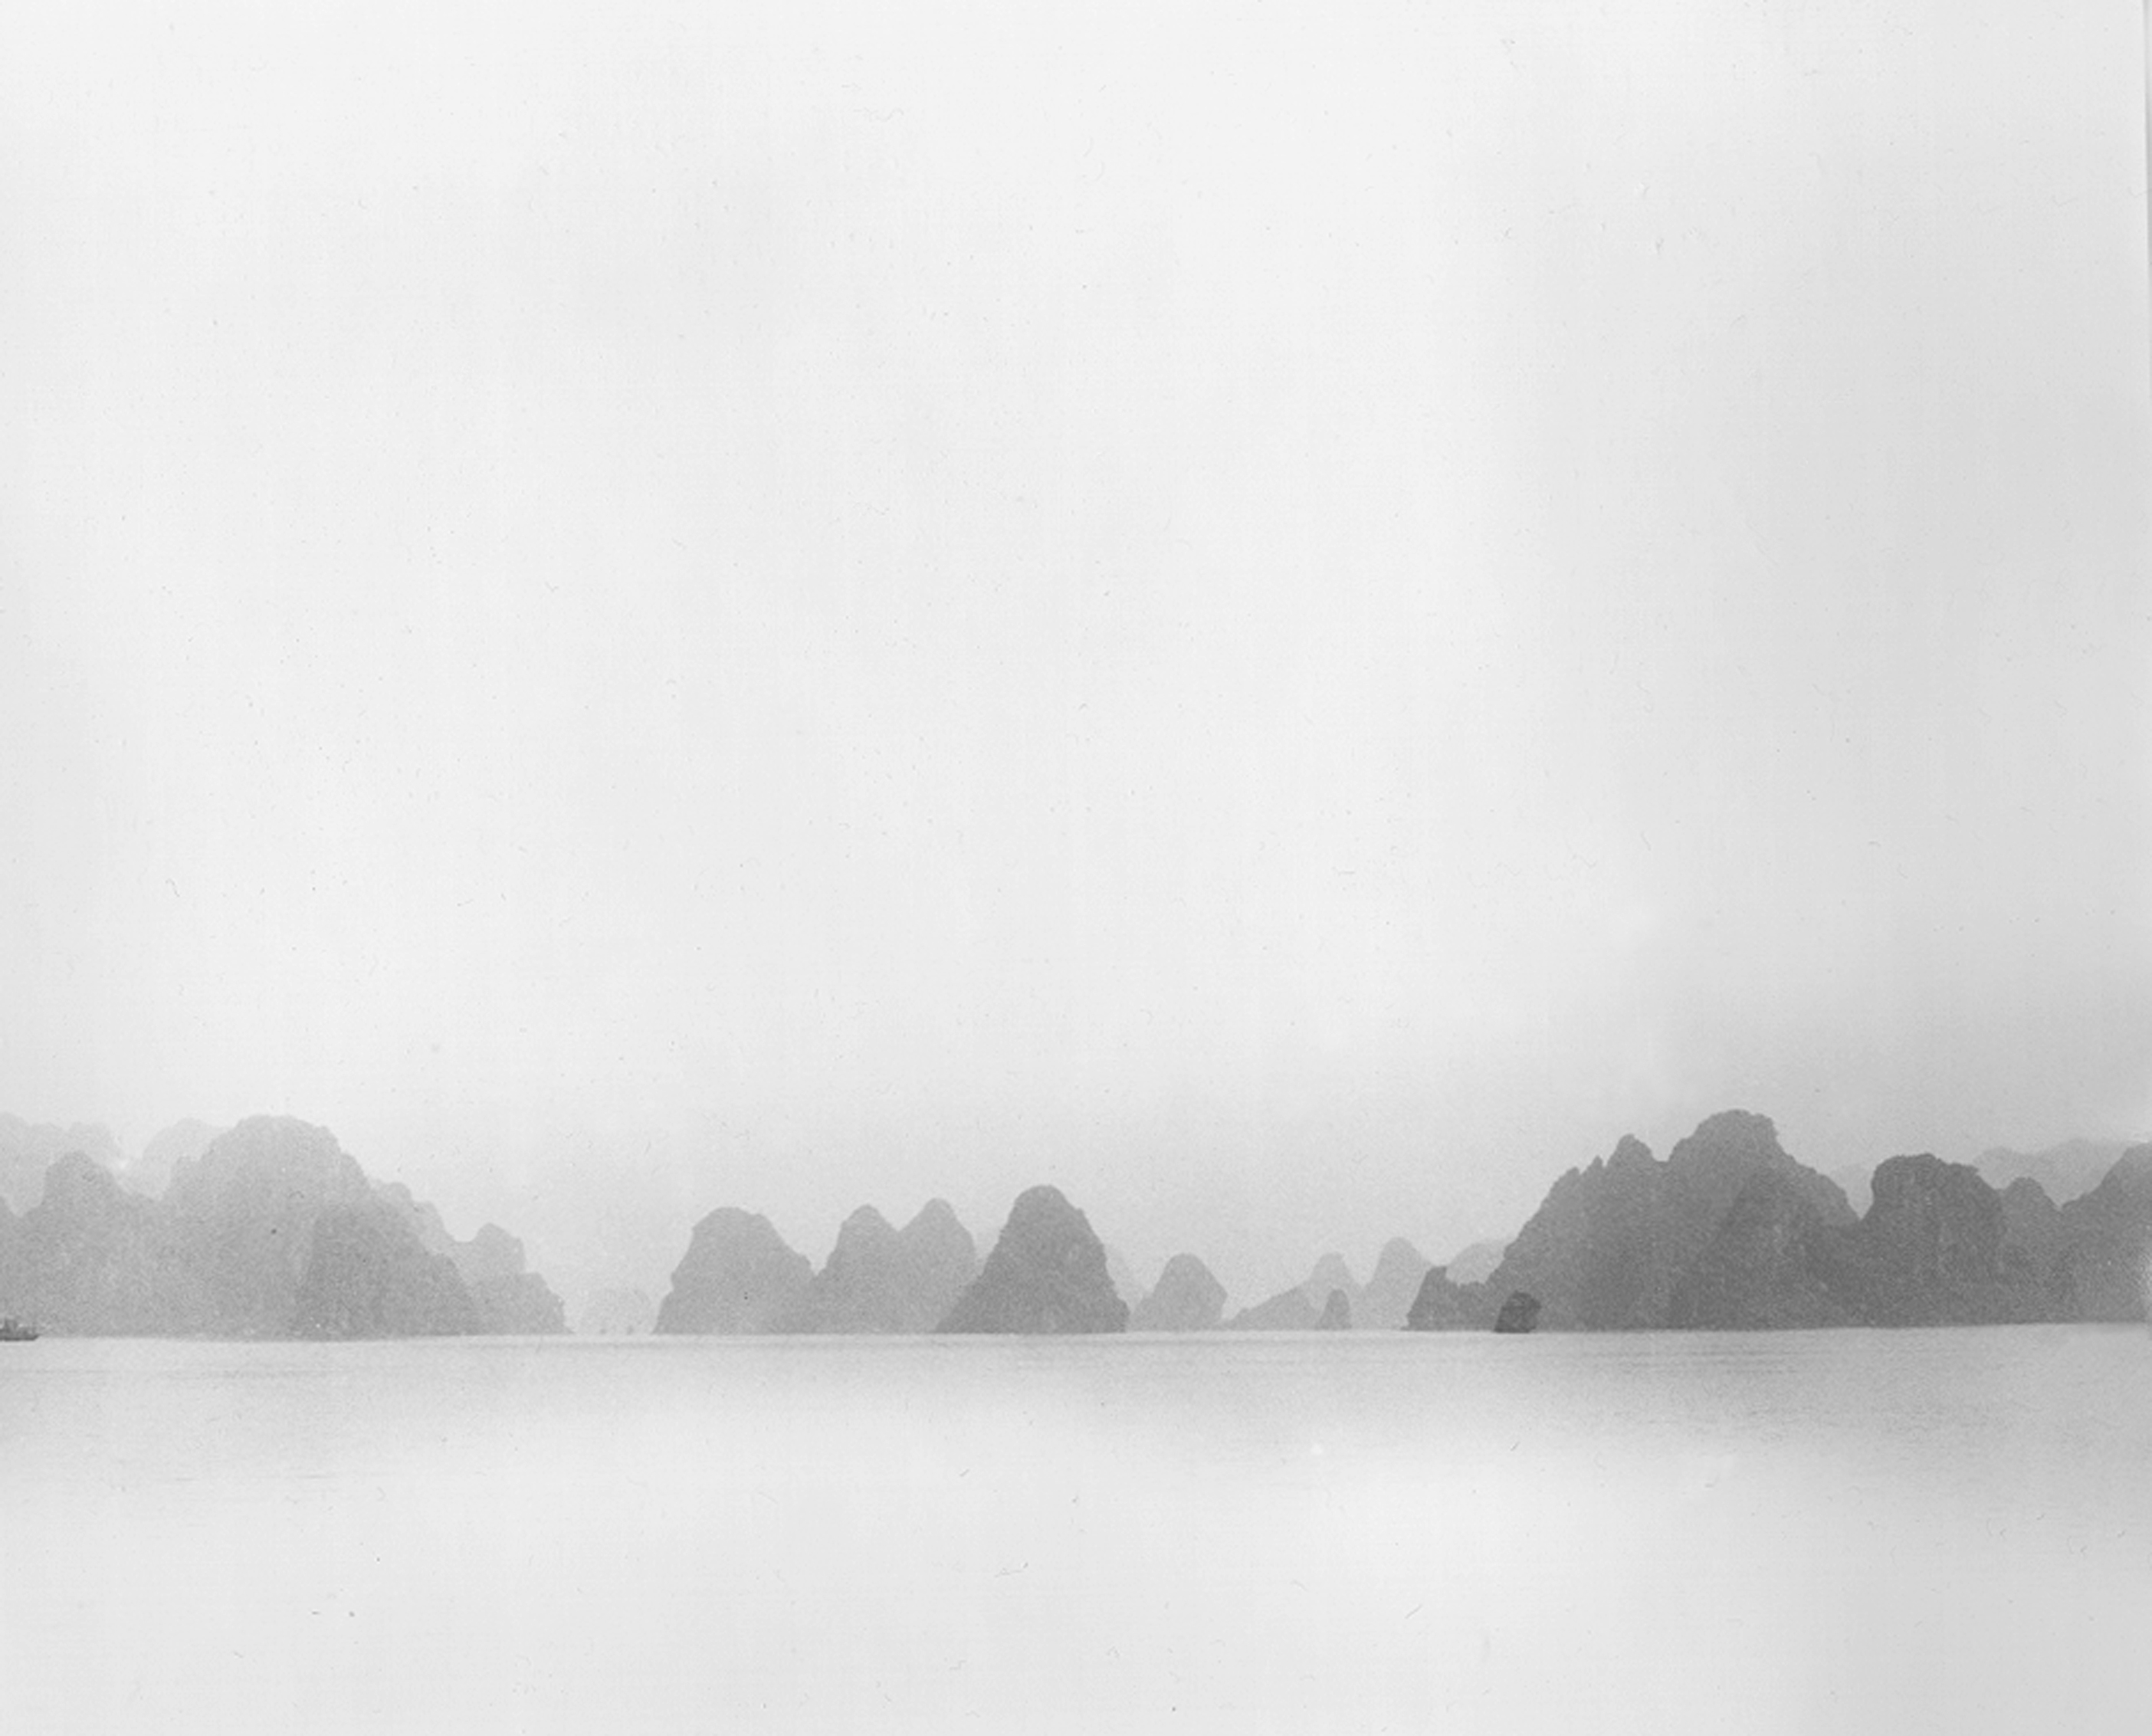 File:Han long bay vietnam by C. Michael Gibson.jpg